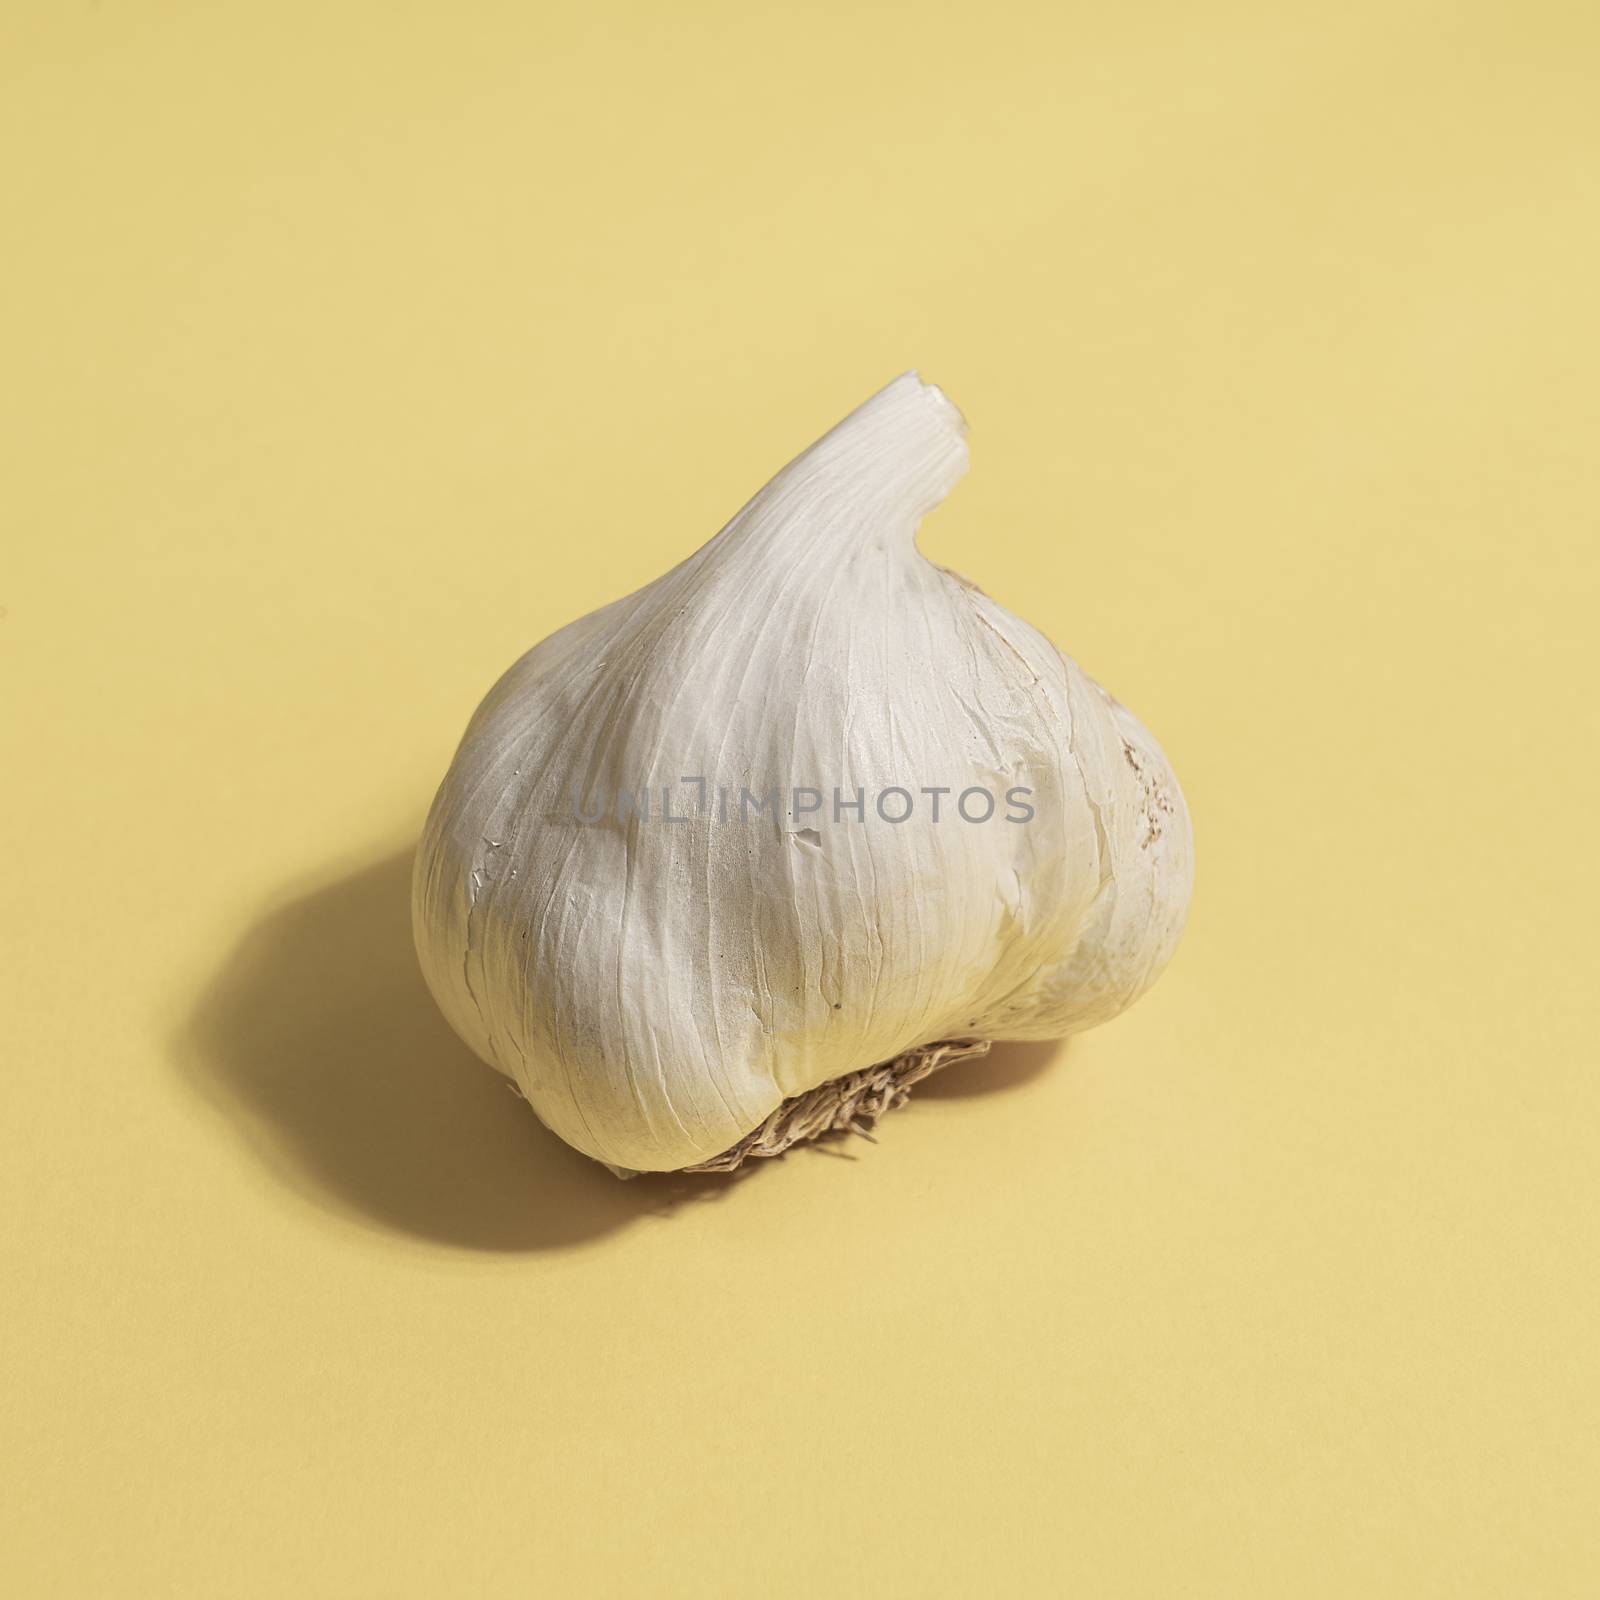 A garlic bulb on a yellow surface